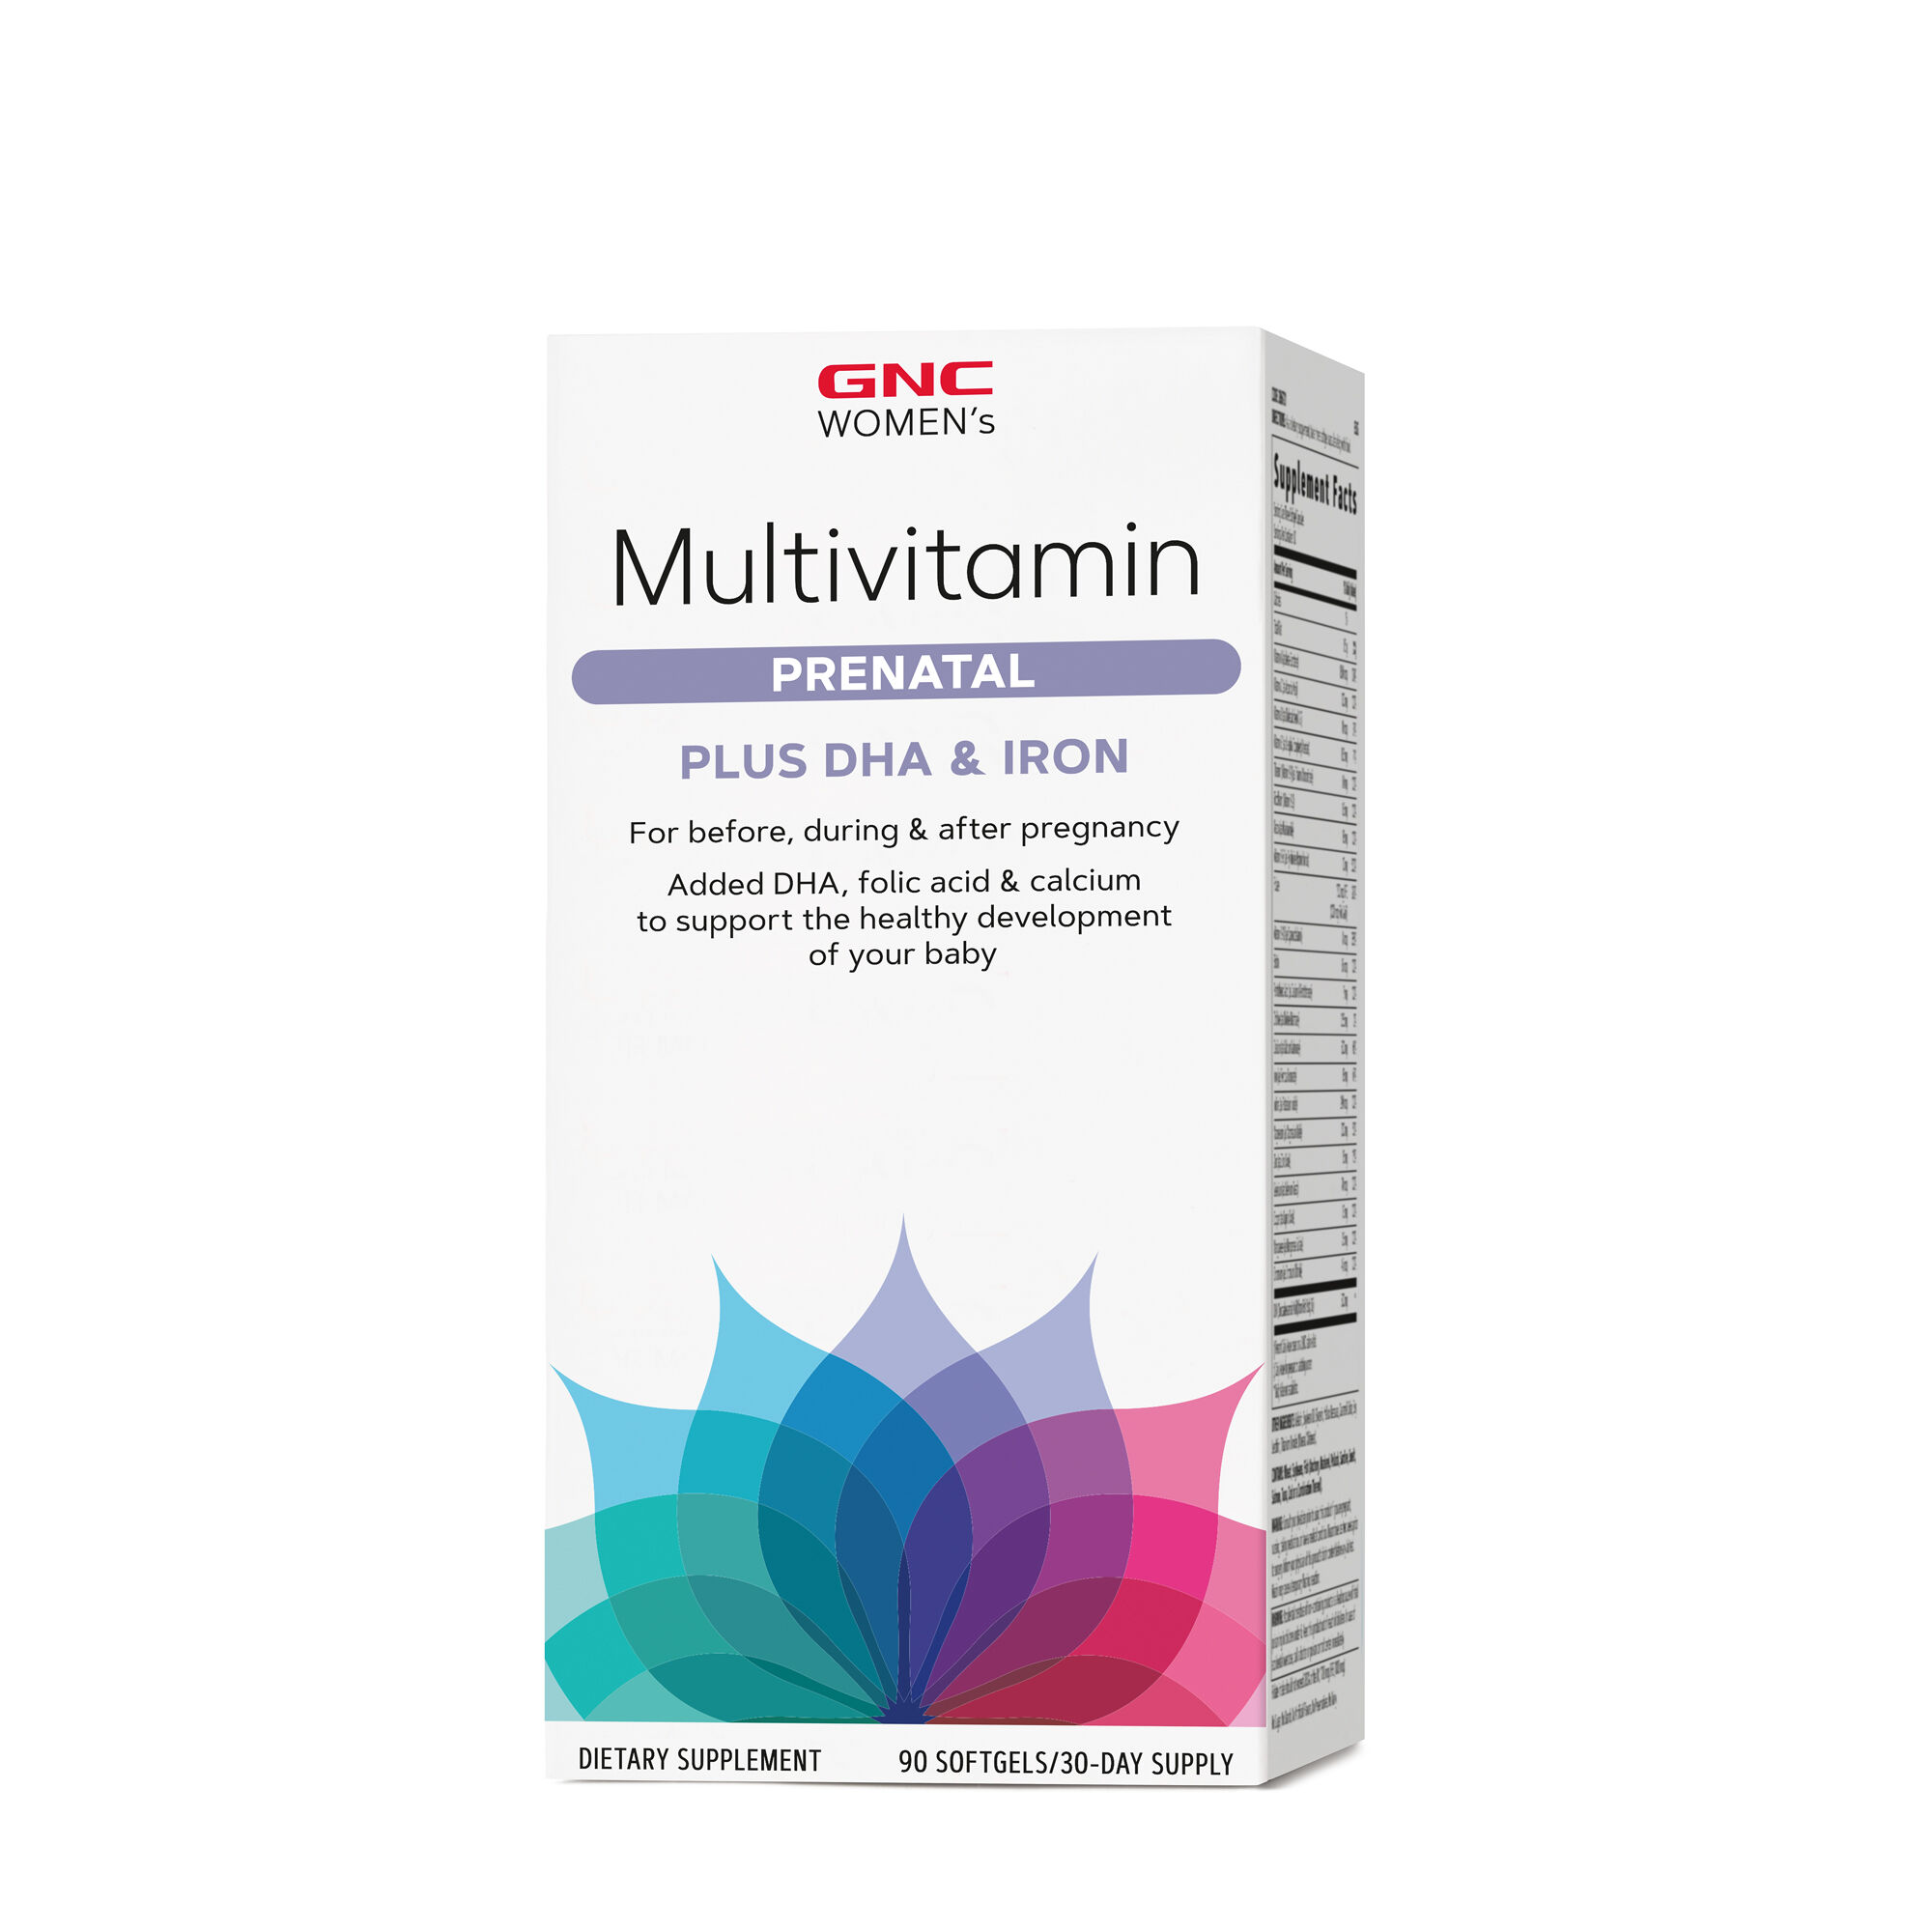 vervaldatum Vernauwd zijde GNC Women's Multivitamin Prenatal Formula with DHA & Iron | GNC